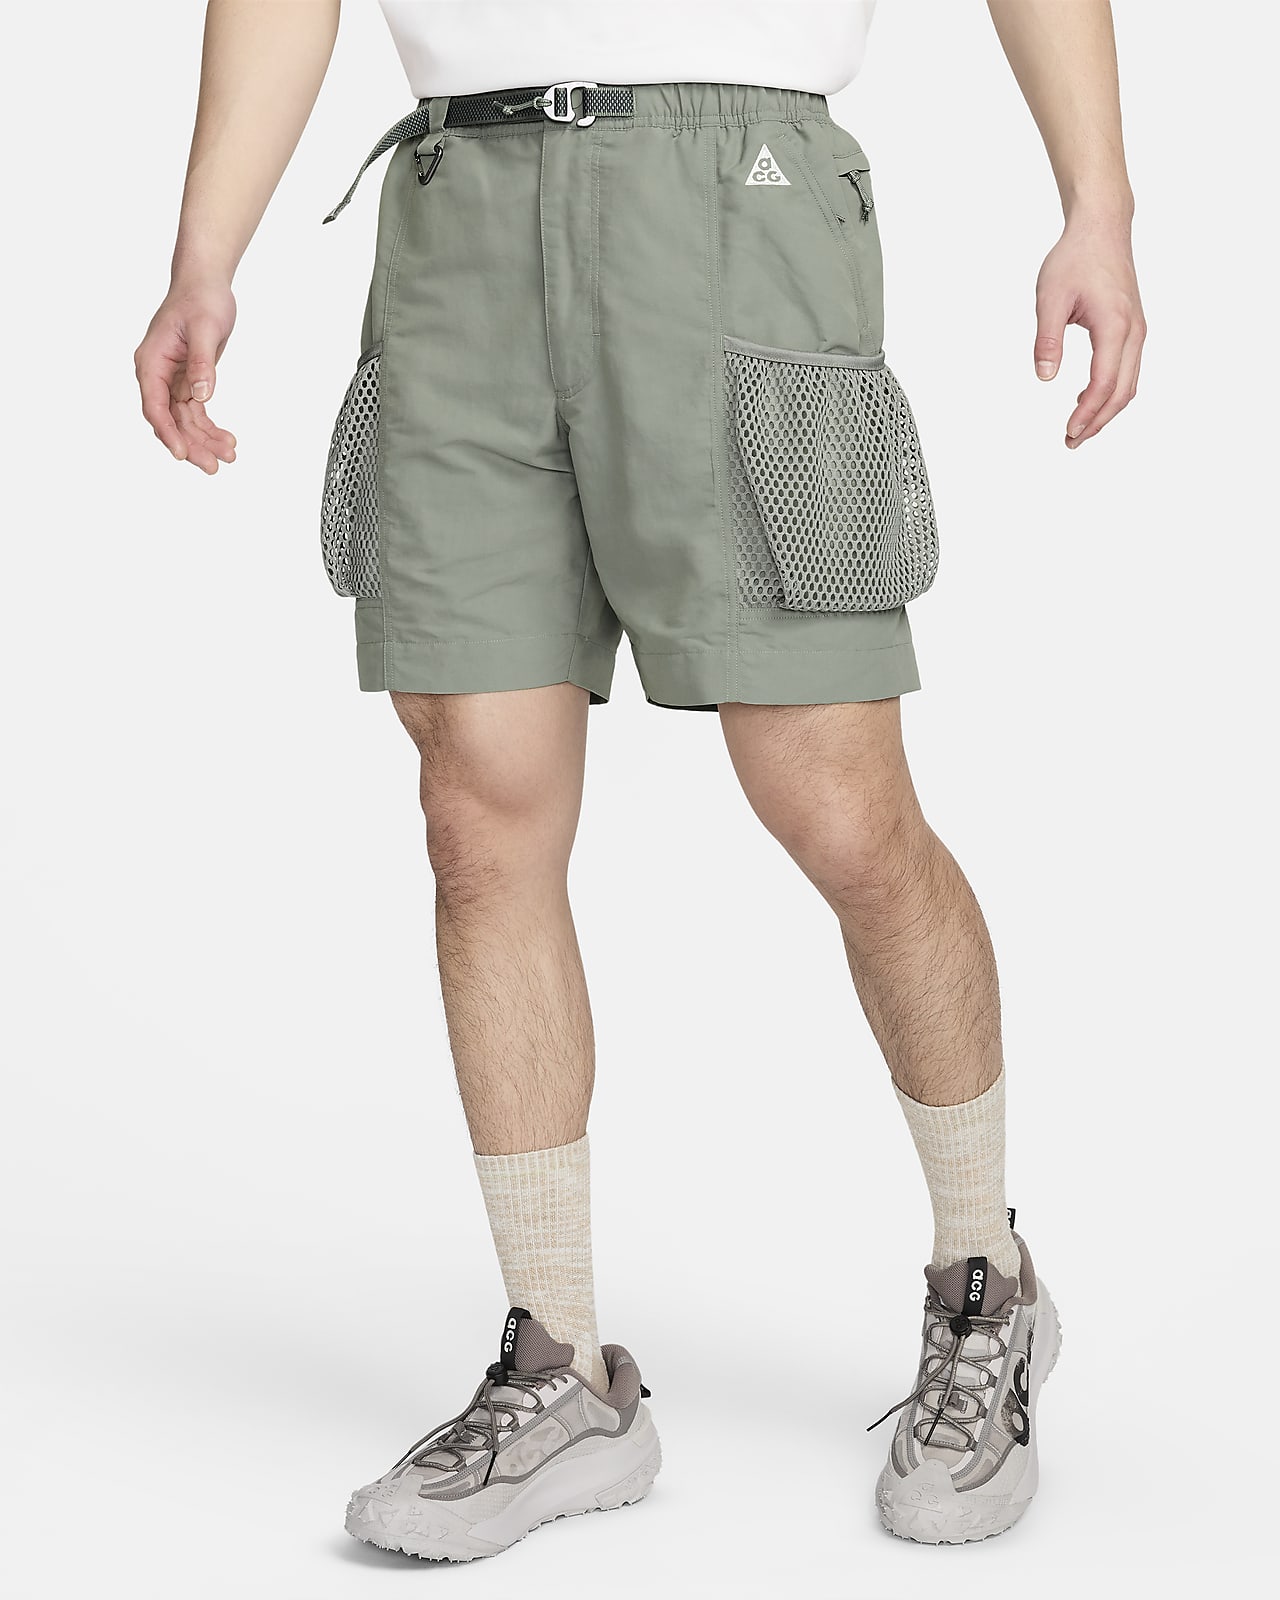 Nike ACG "Snowgrass" Men's Cargo Shorts